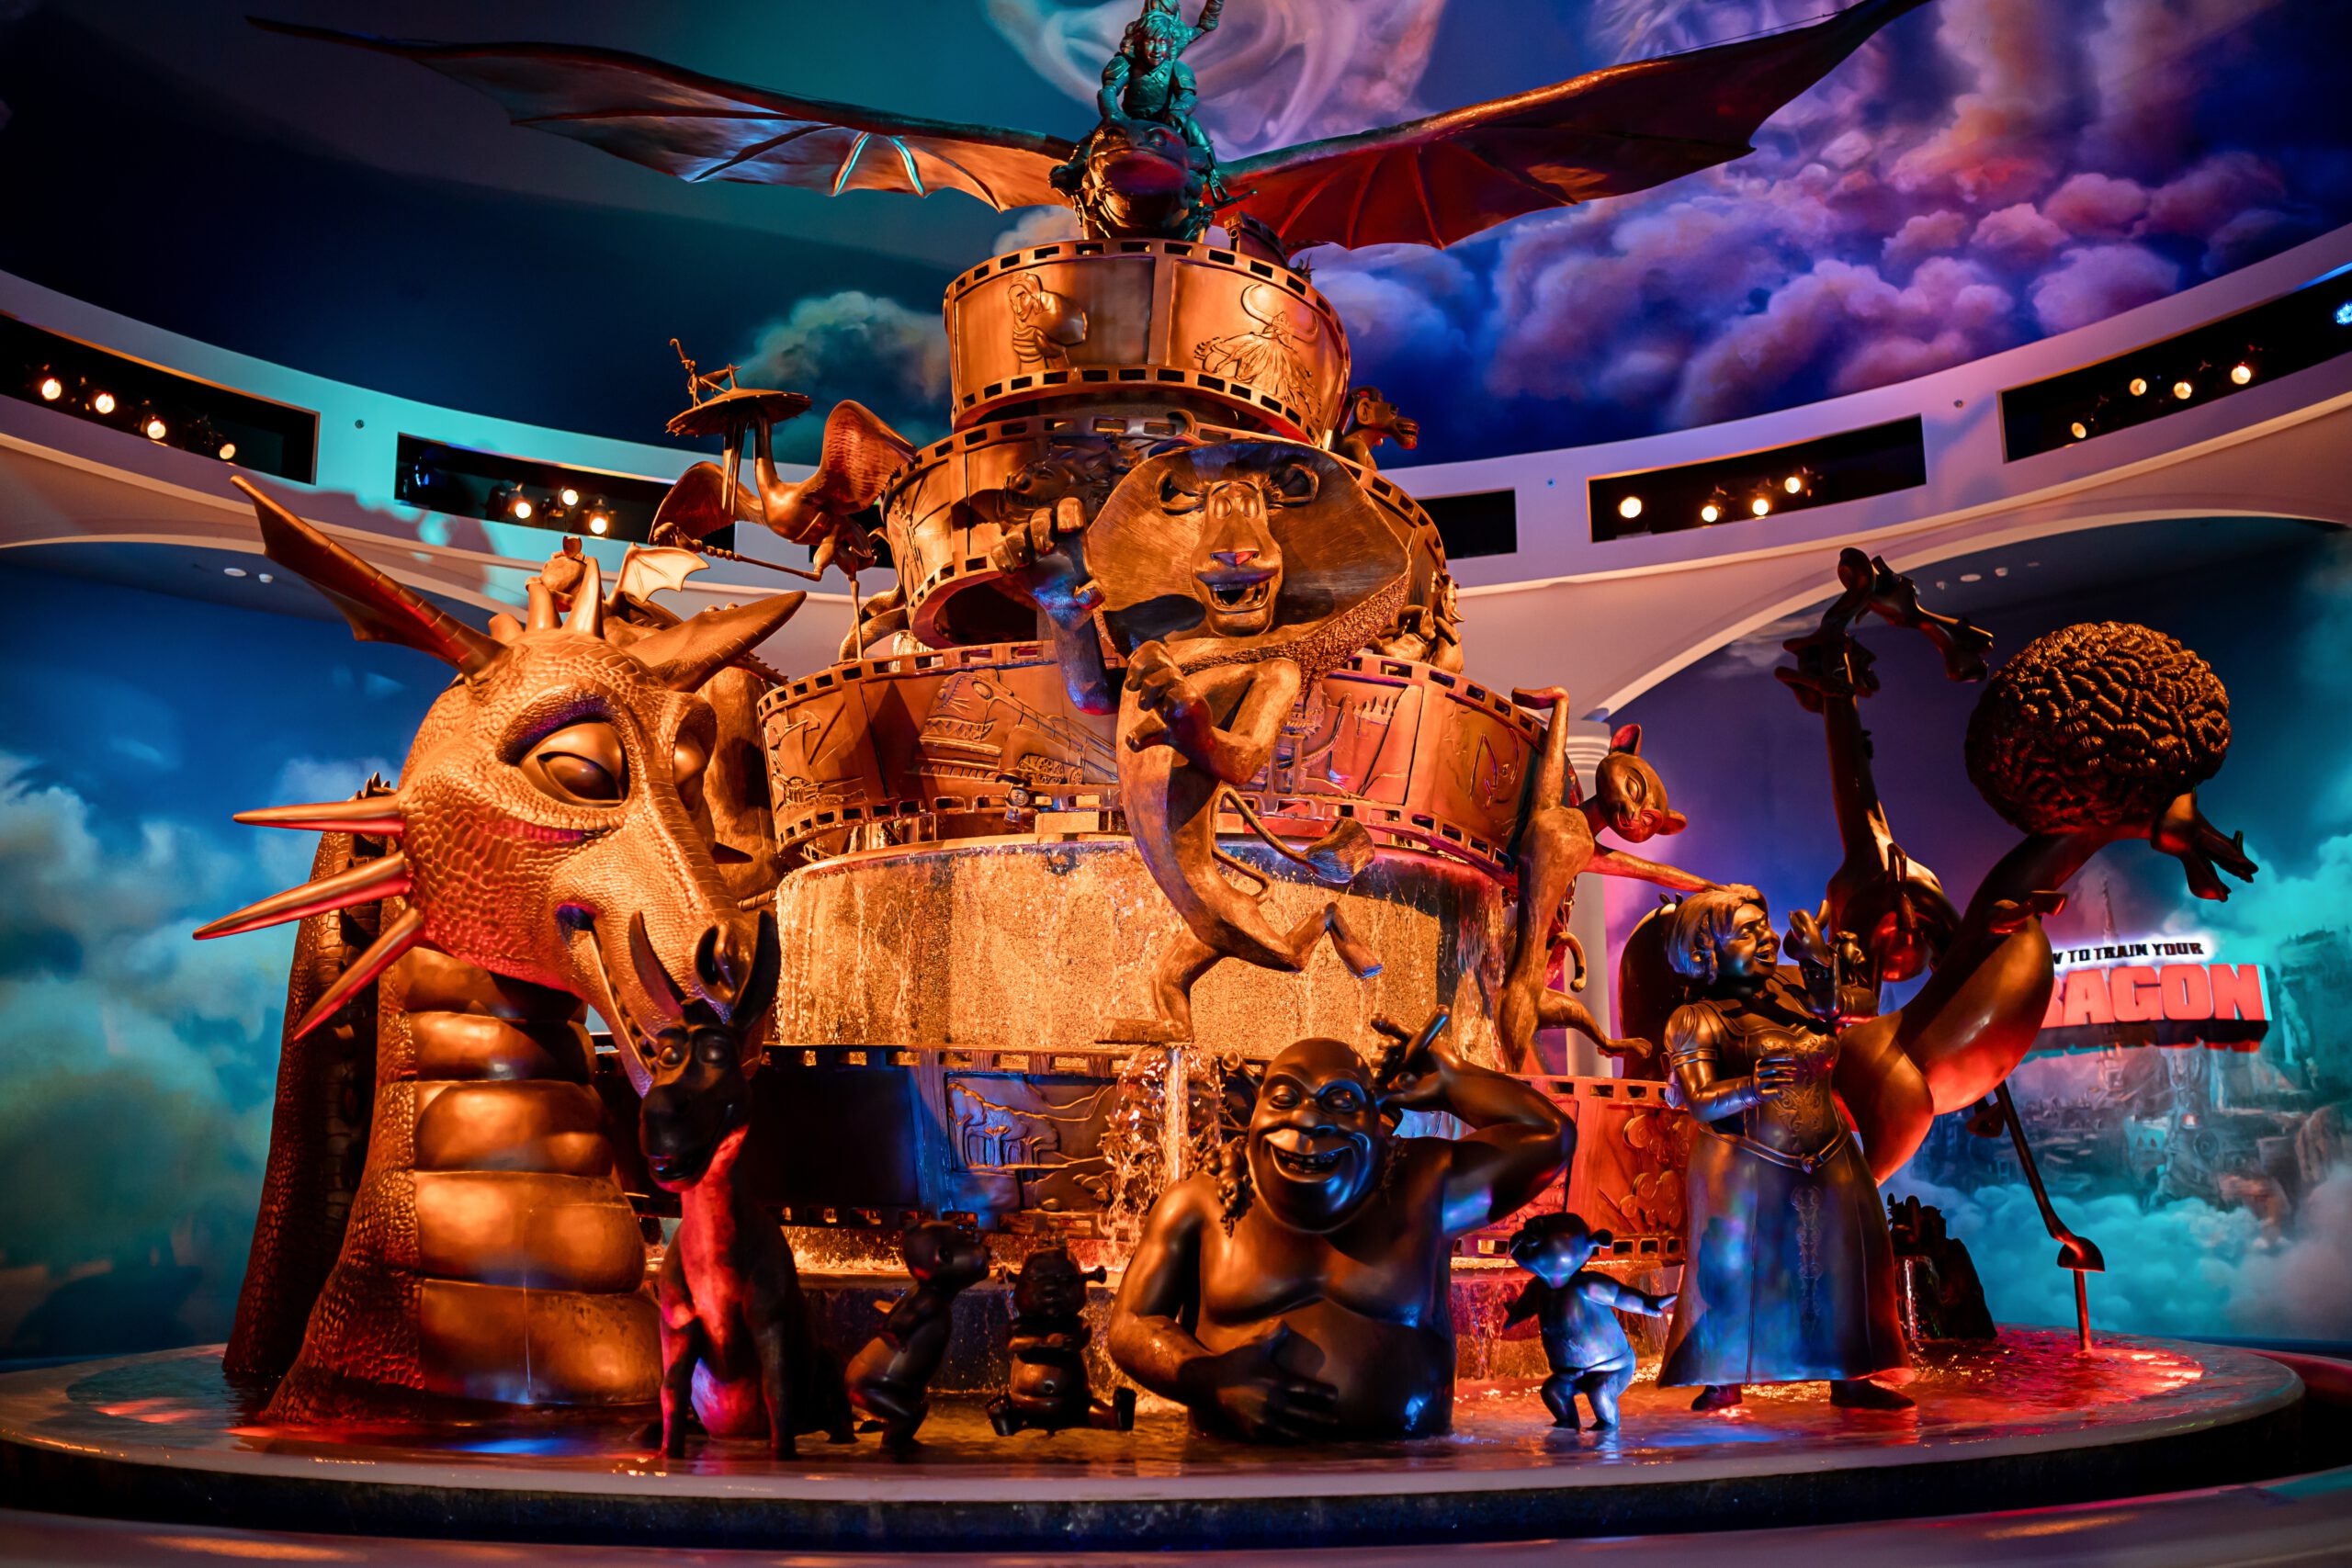 Motiongate Dubai Theme Park - DreamWorks pavillion